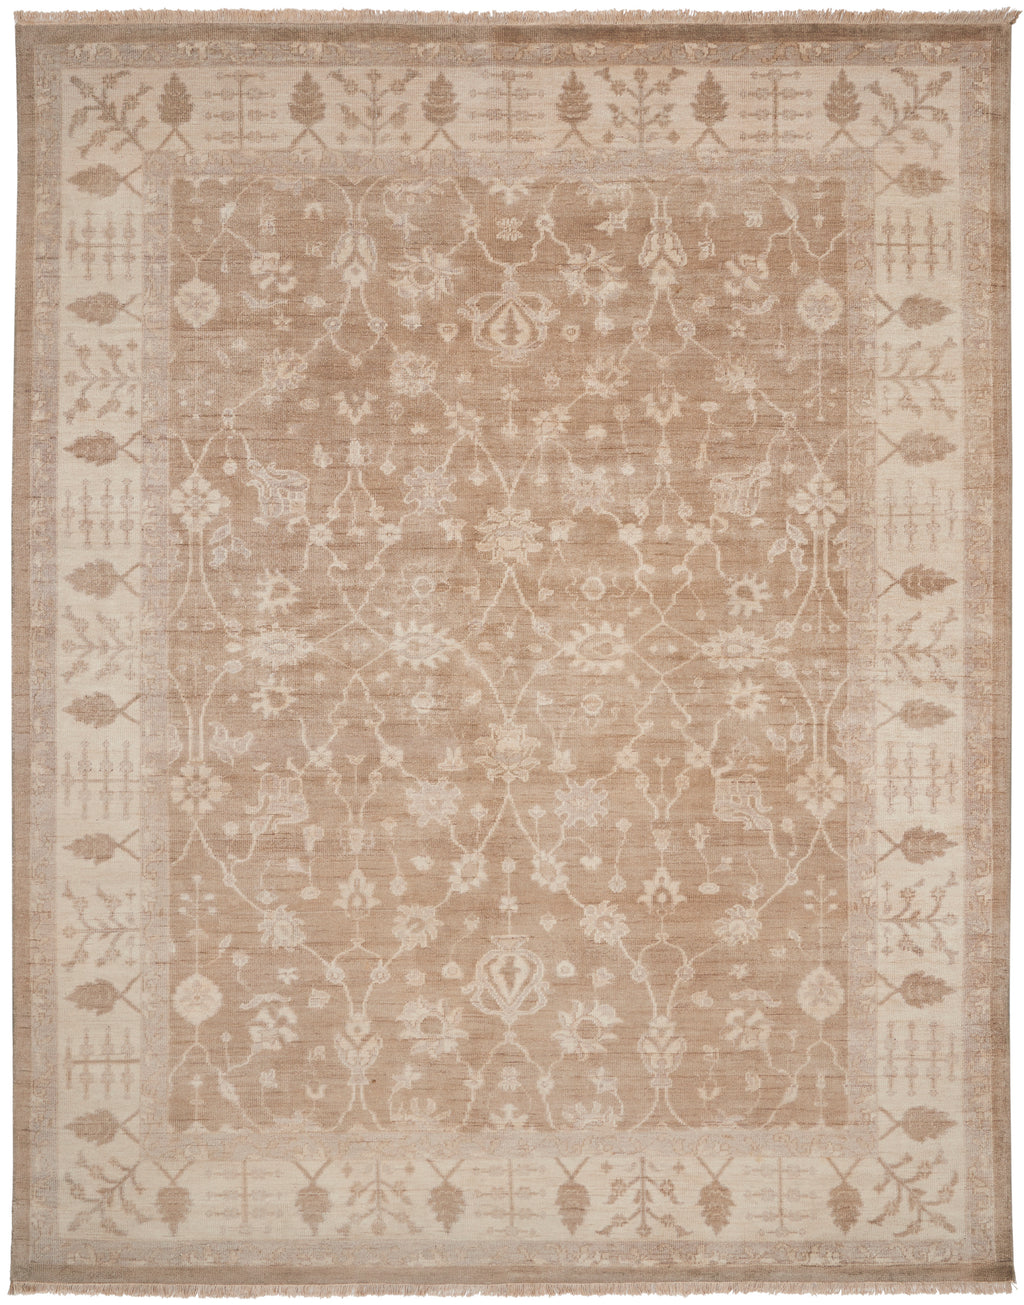 Intricate designs on a vintage beige carpet with ornamental motifs